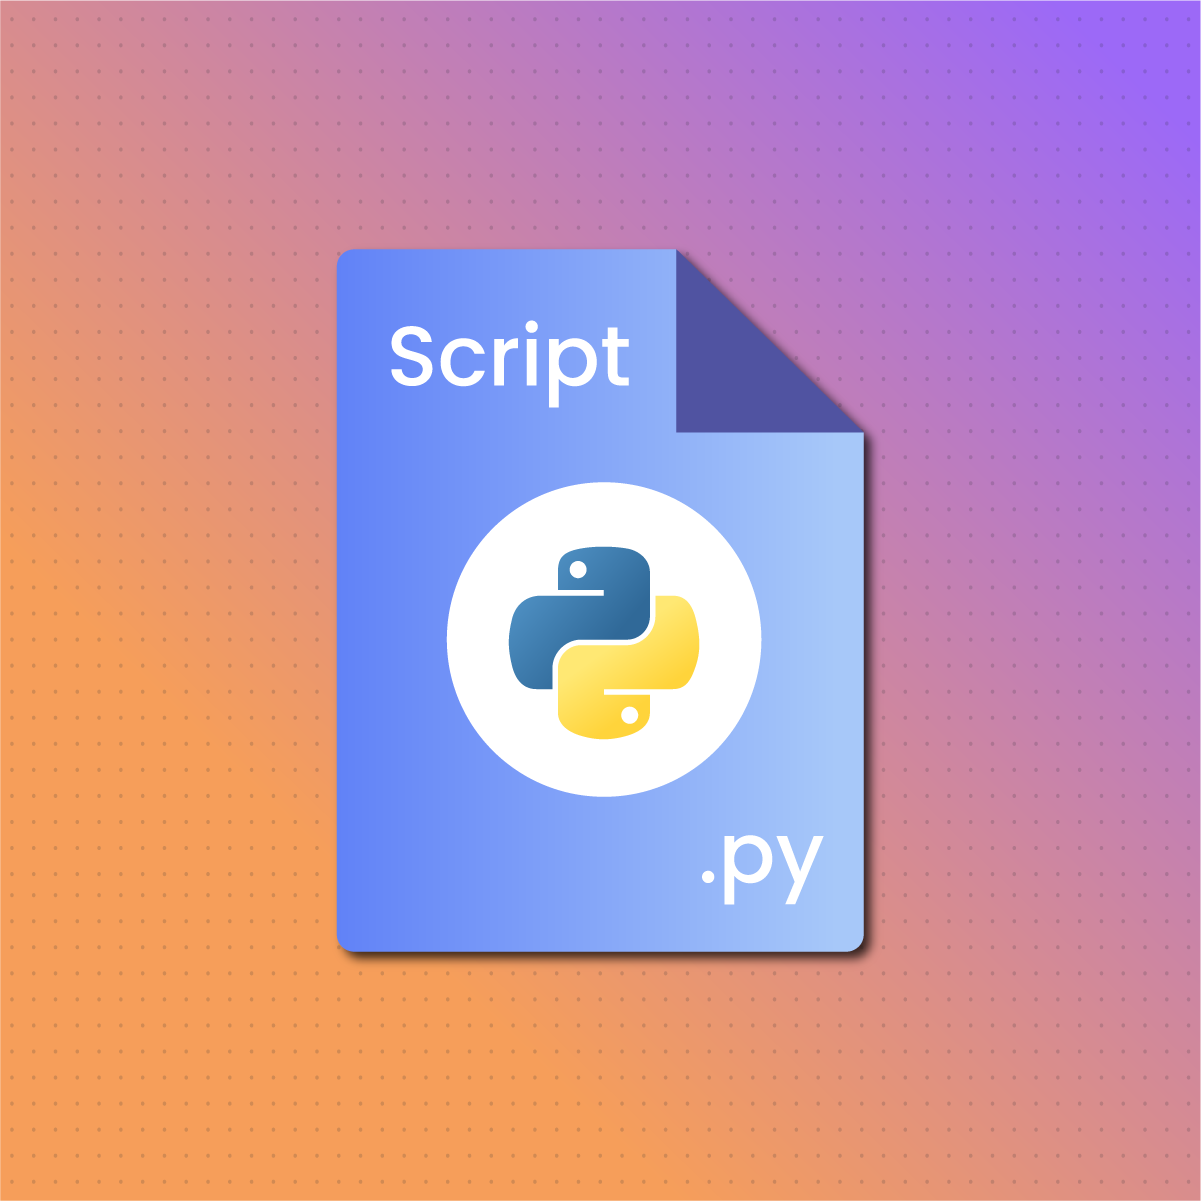 What is a Python Script?